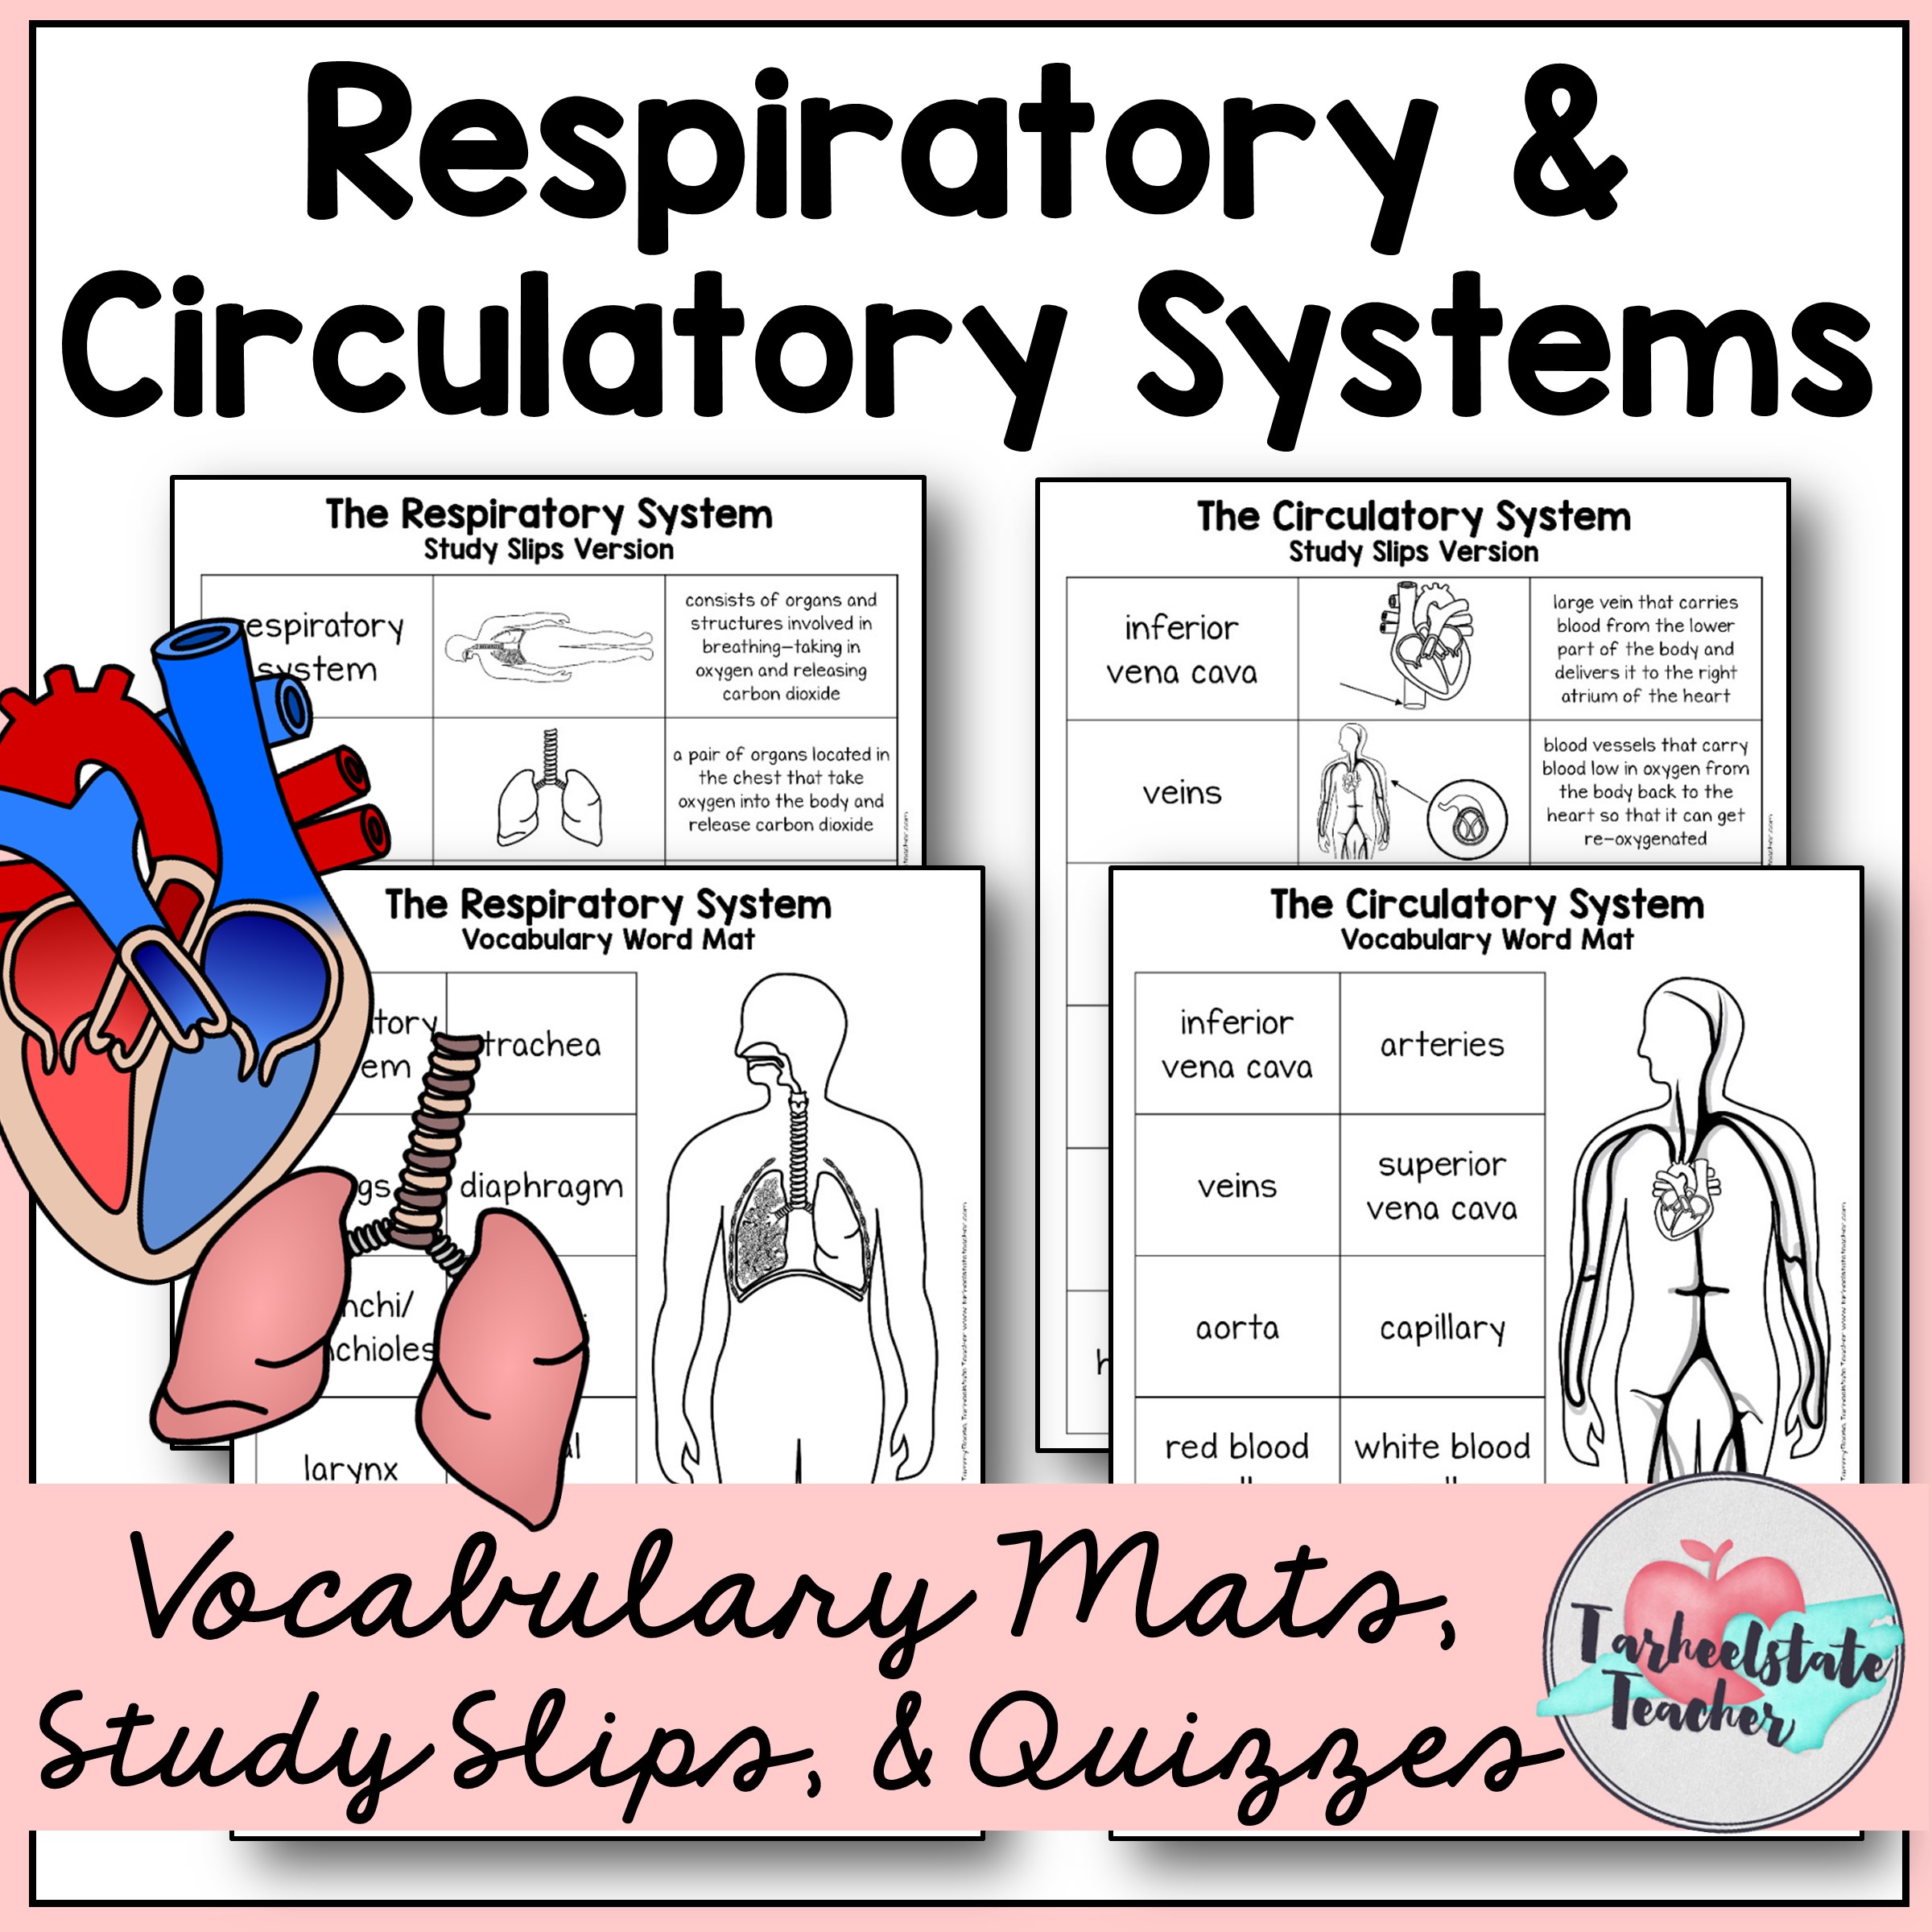 Respiratory Circulatory Systems.jpg